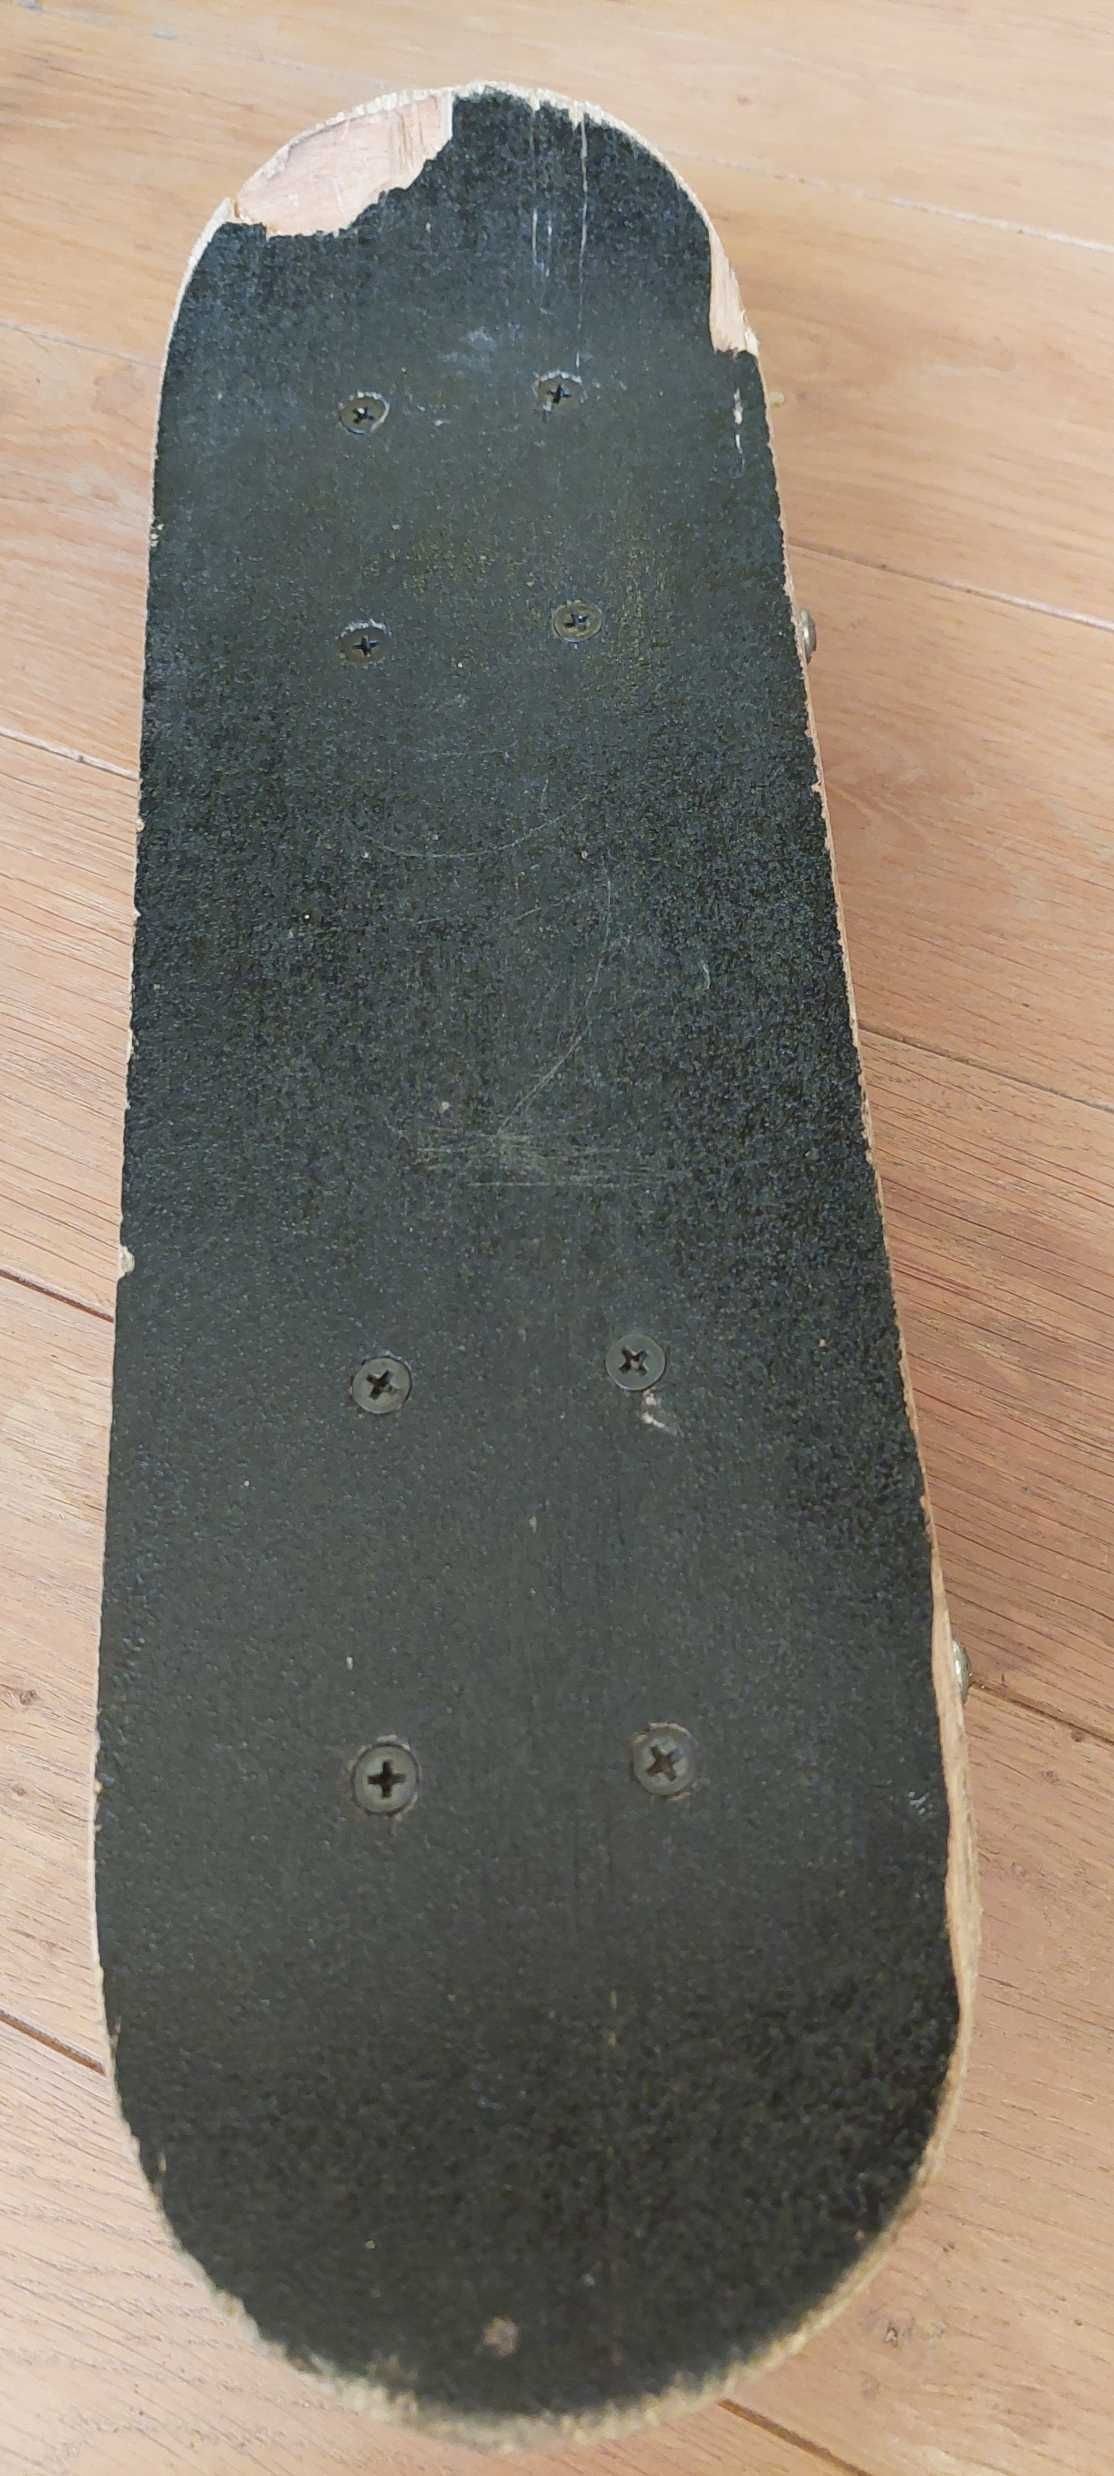 BatSport deskorolka klasyczna/ skateboard SD1710-CH 17"